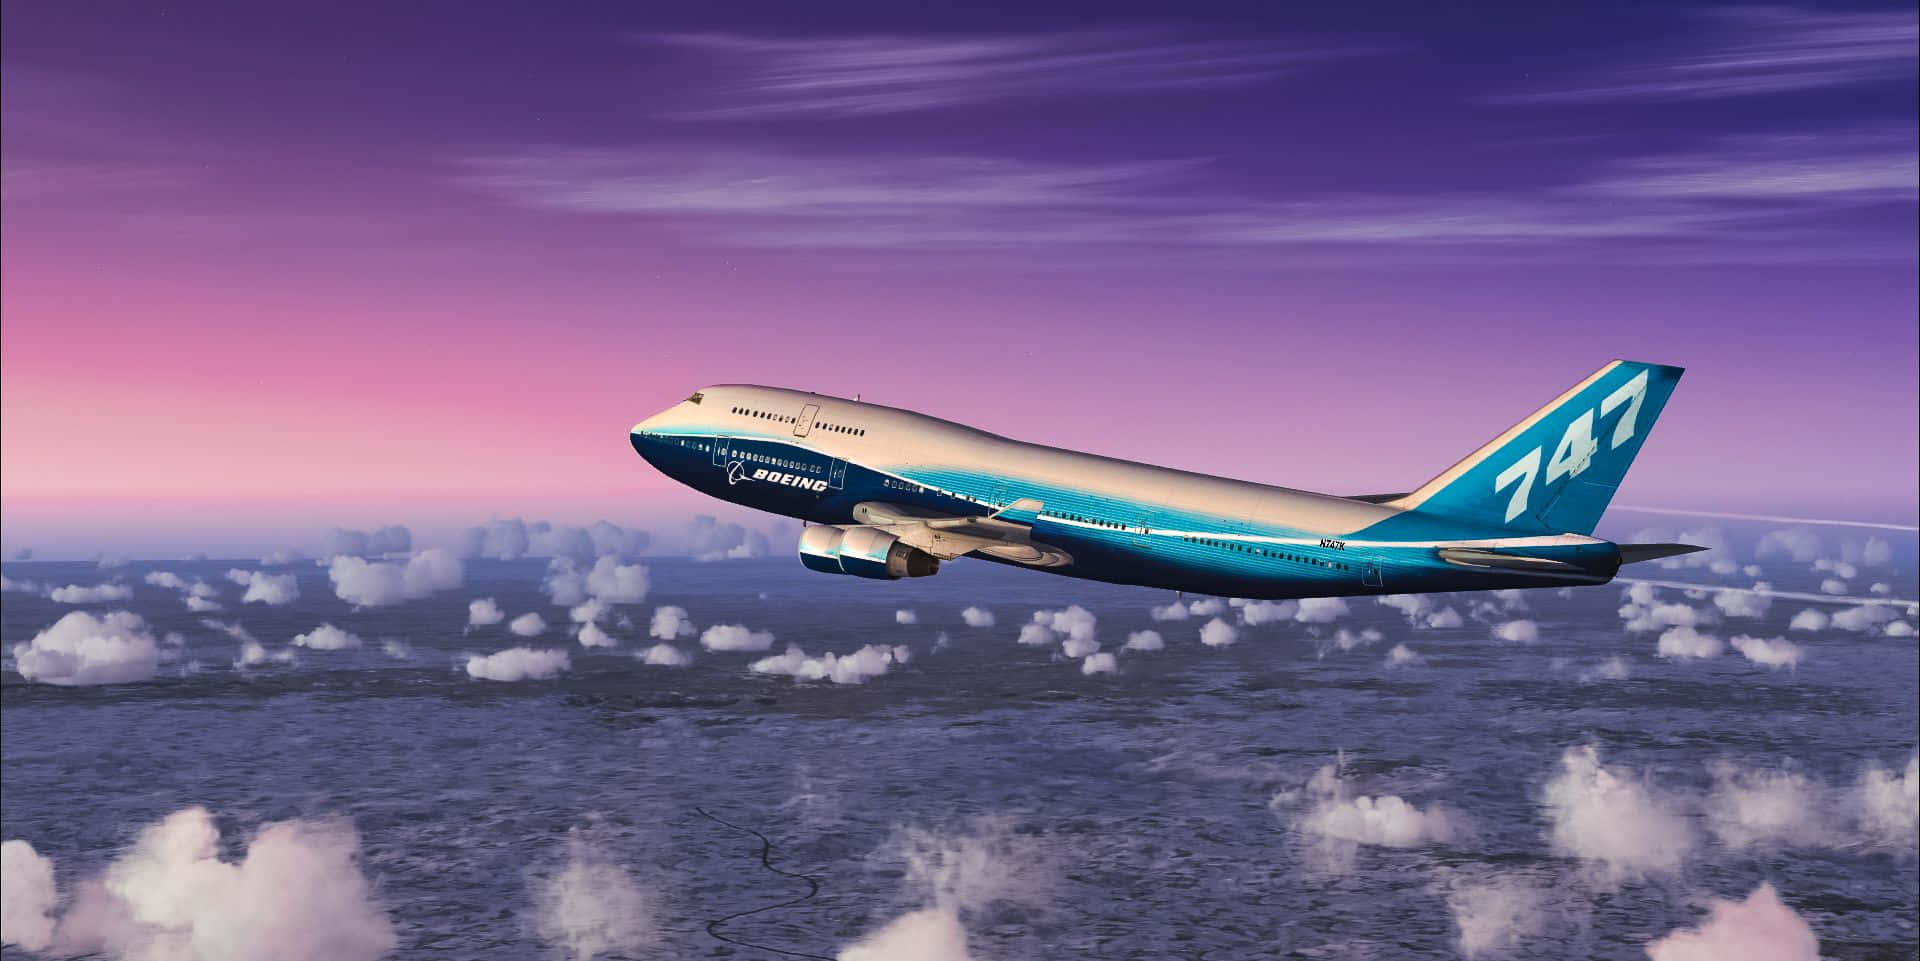 747 Airplane Over Skies